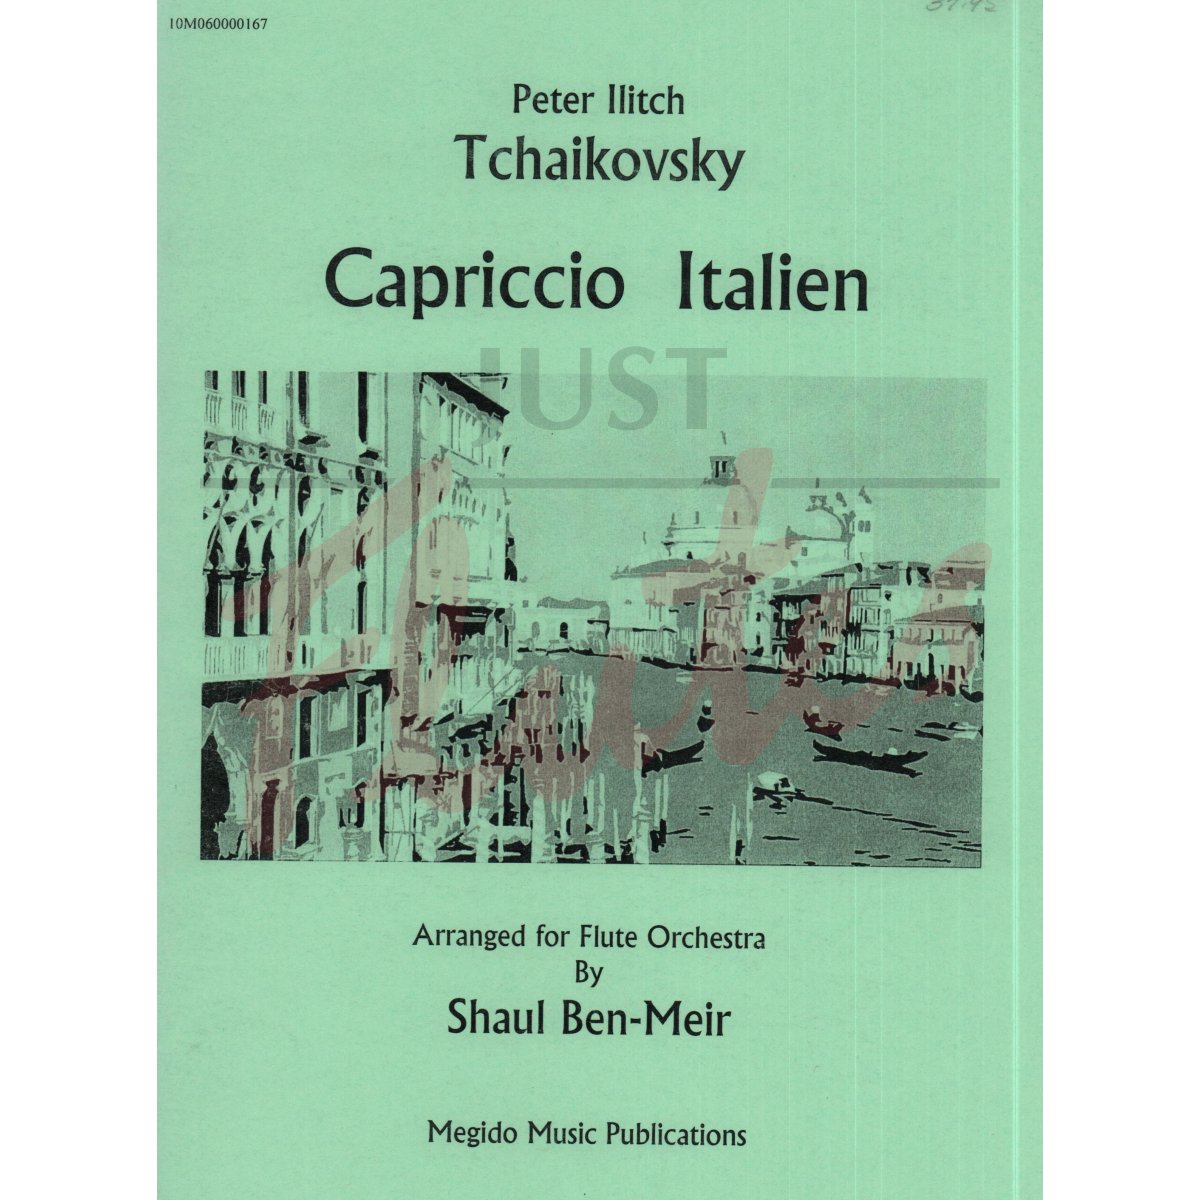 Capriccio Italien [Flute Orchestra]